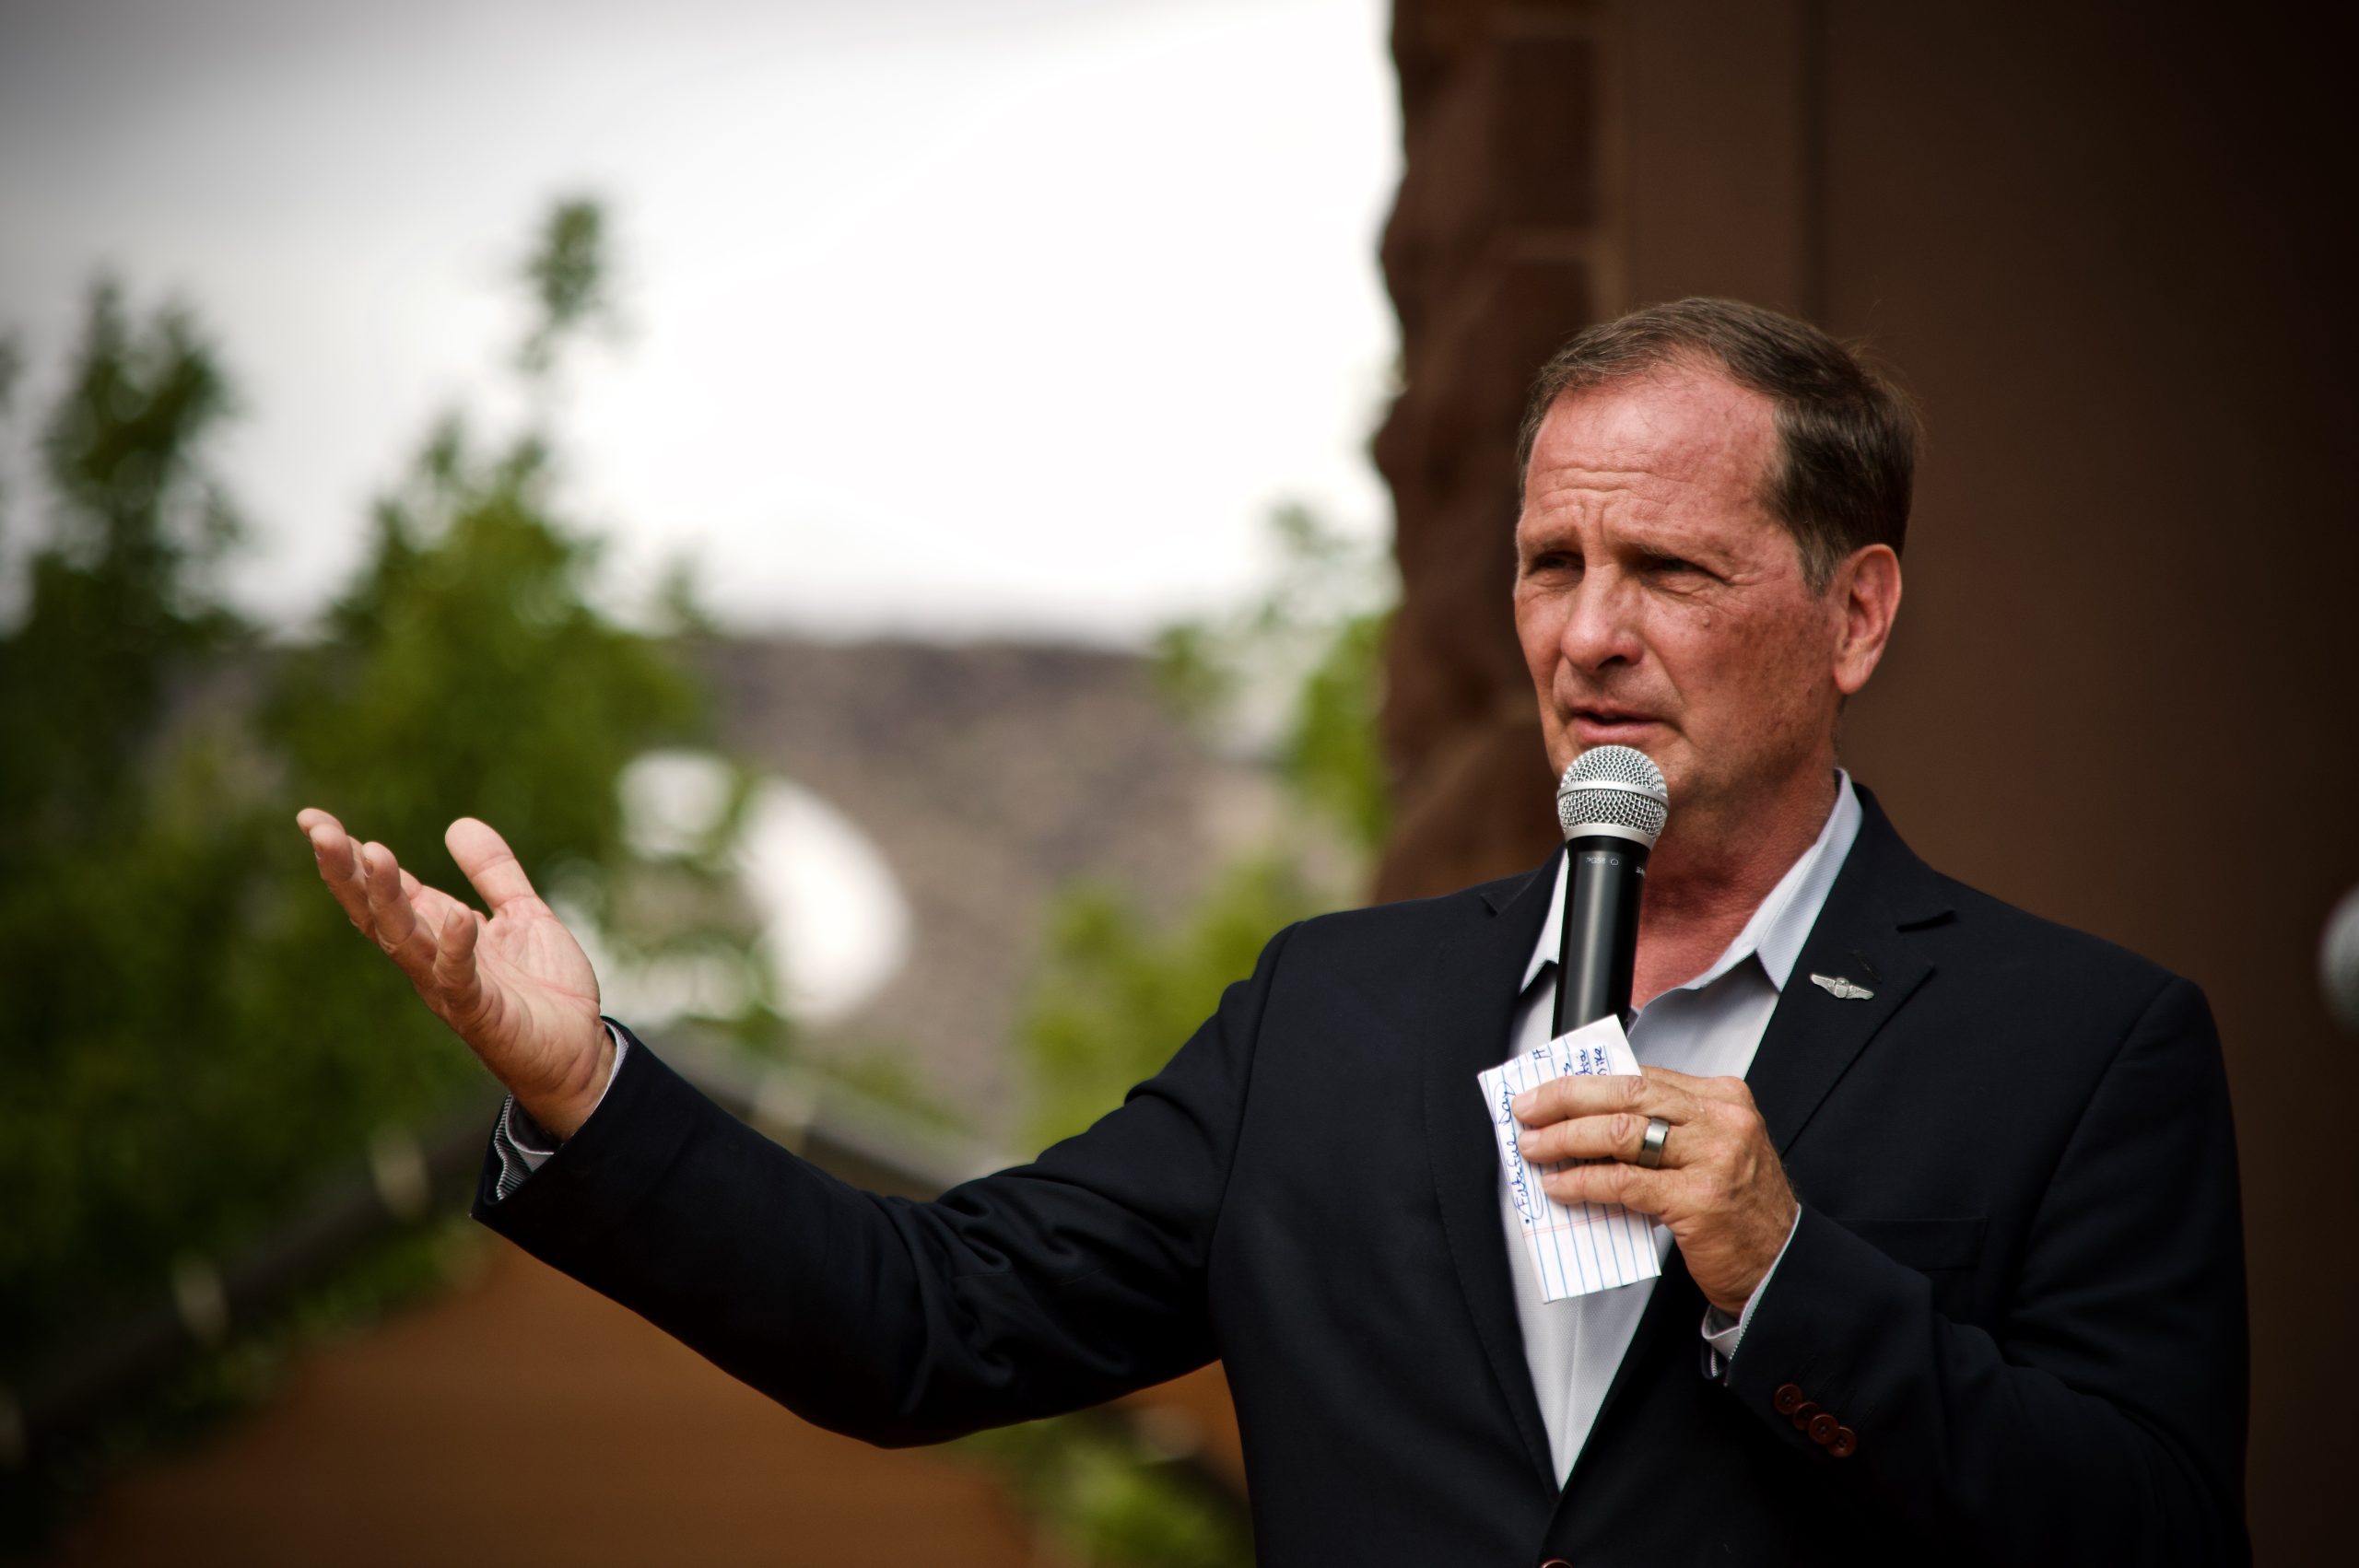 Chris Stewart, 6-term Utah Republican, resigning from Congress